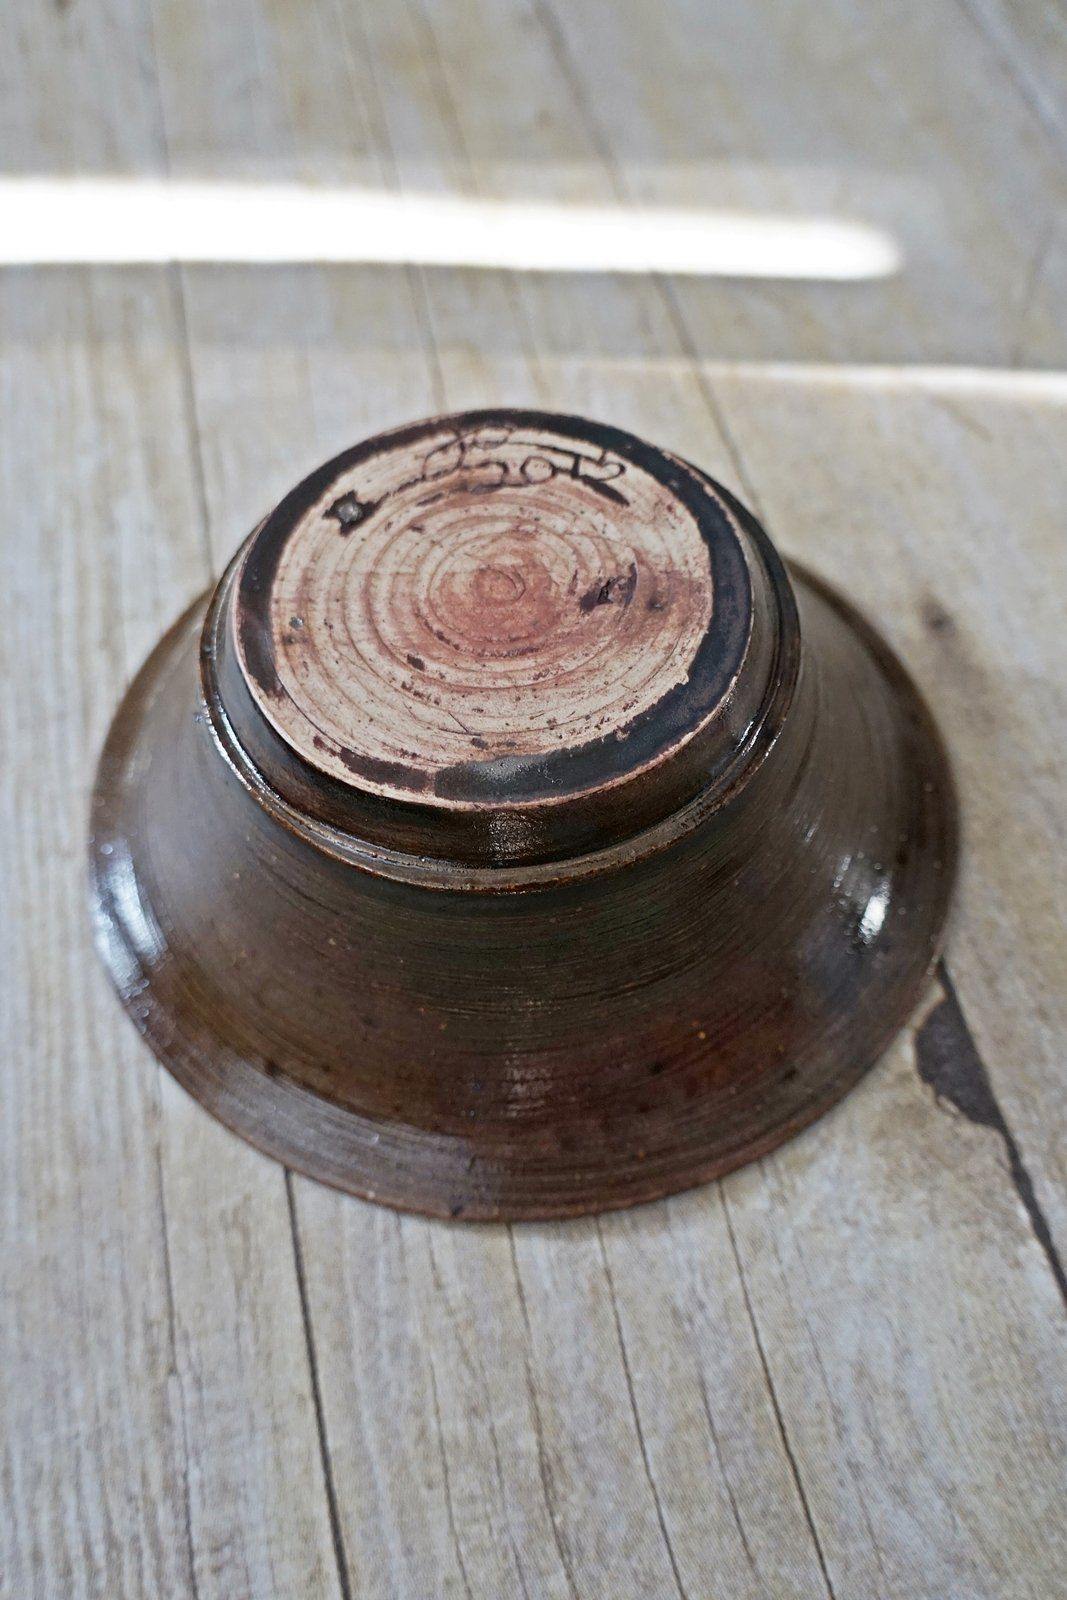 Handmade Ceramic Starburst Bowl-closiTherapi | vinTage